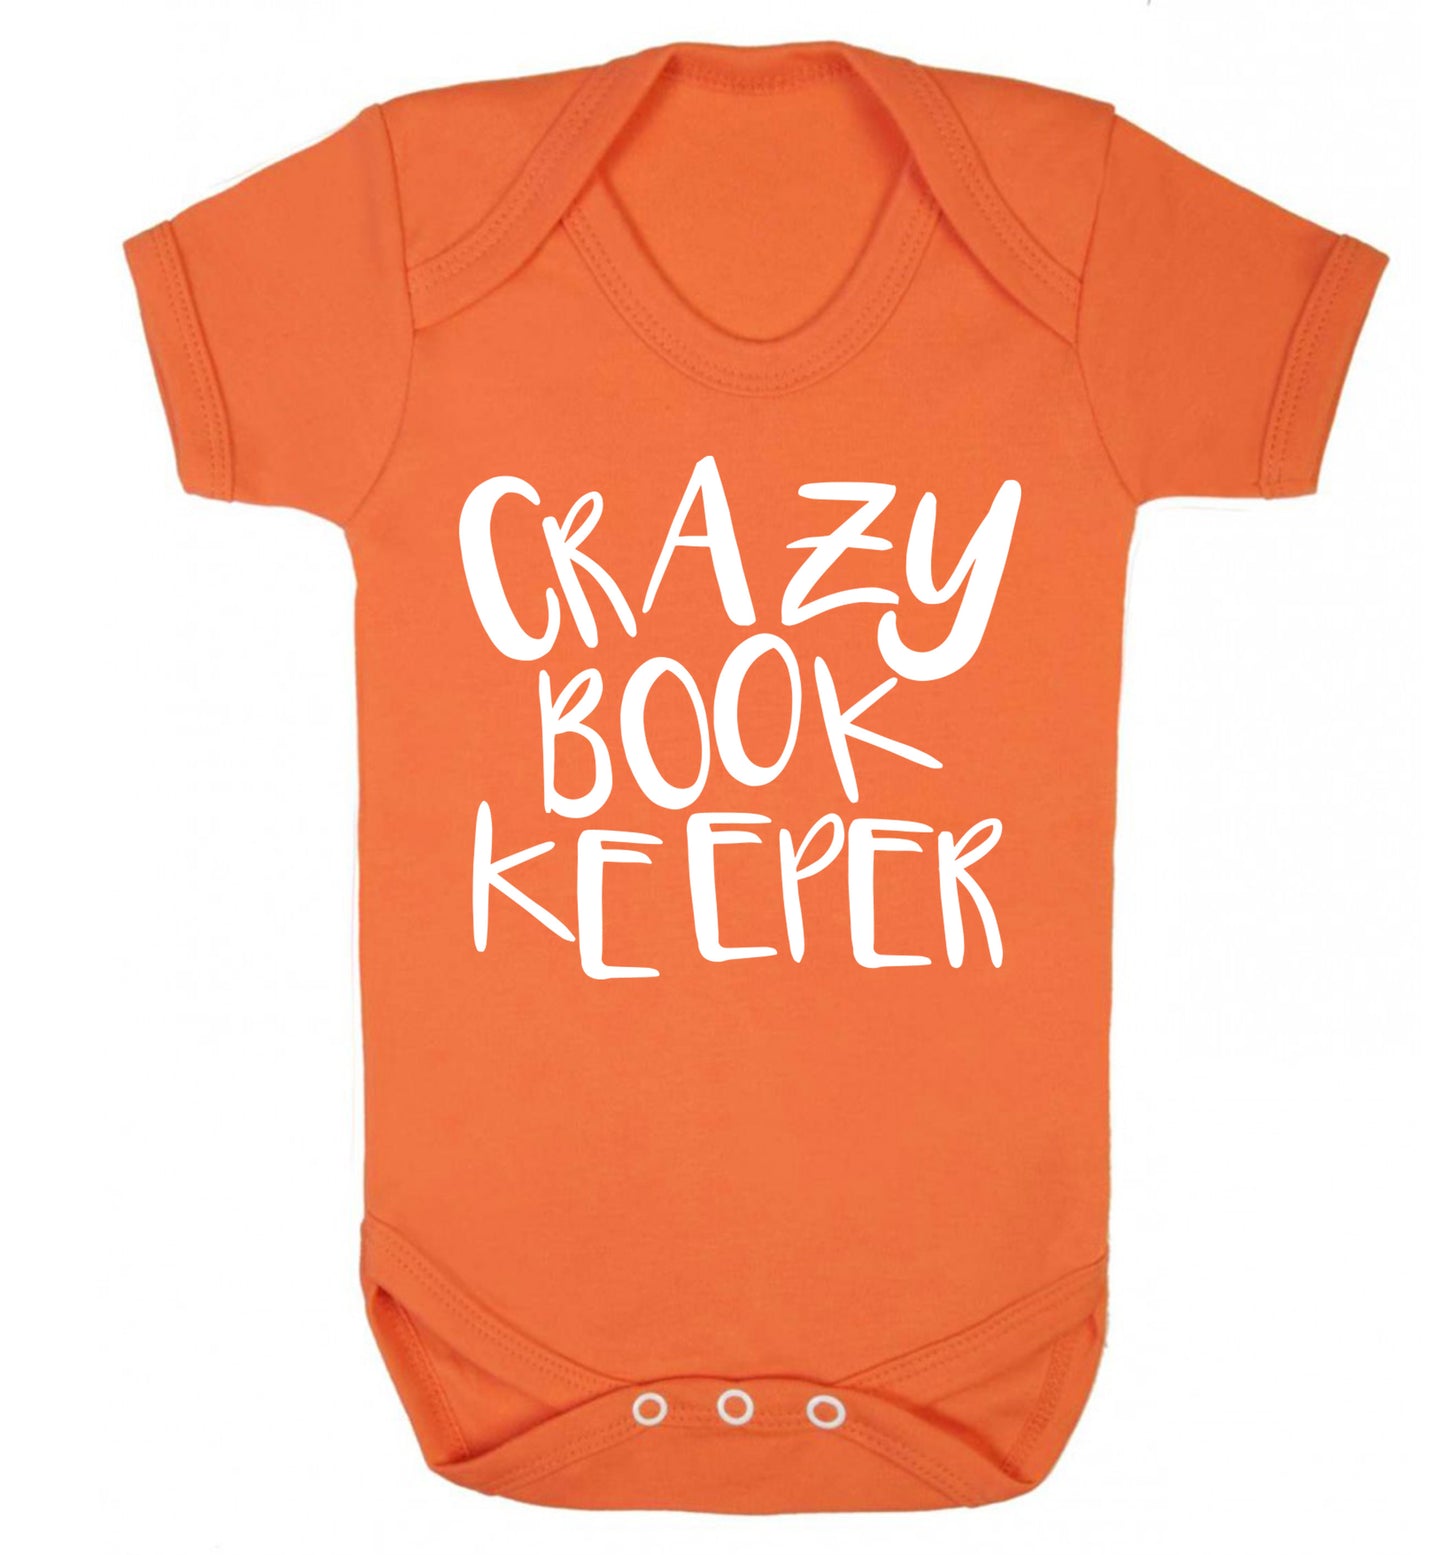 Crazy bookkeeper Baby Vest orange 18-24 months